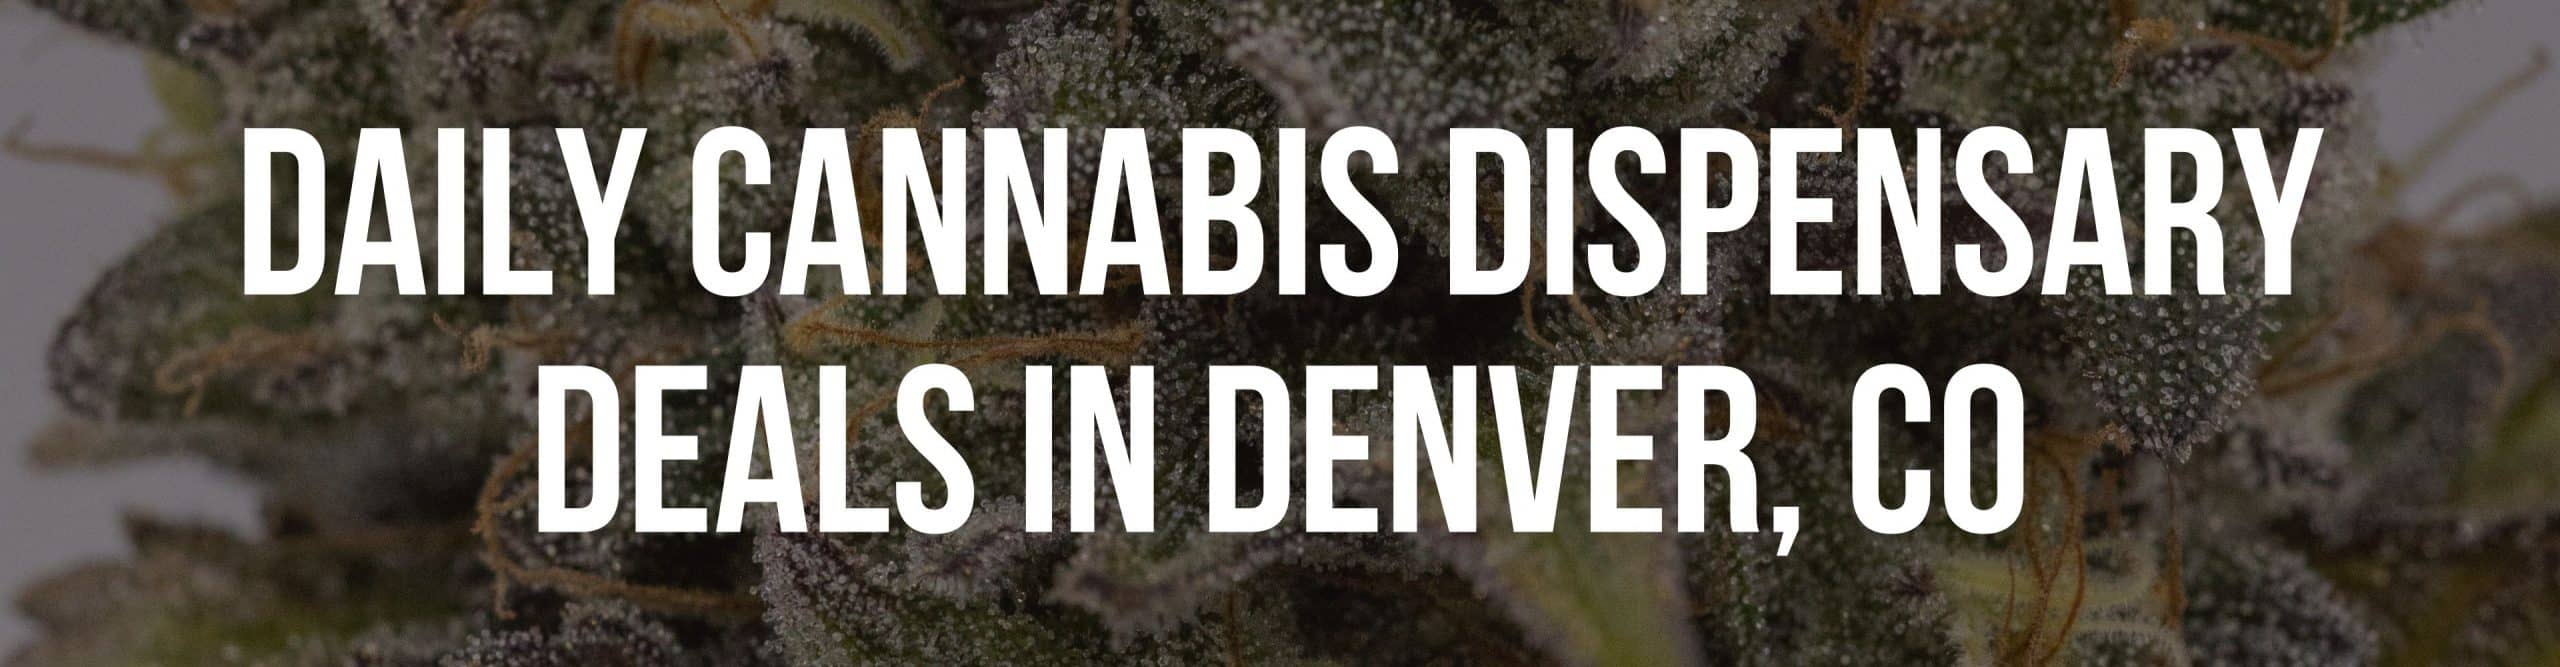 Daily Cannabis Dispensary Deals in Denver, CO